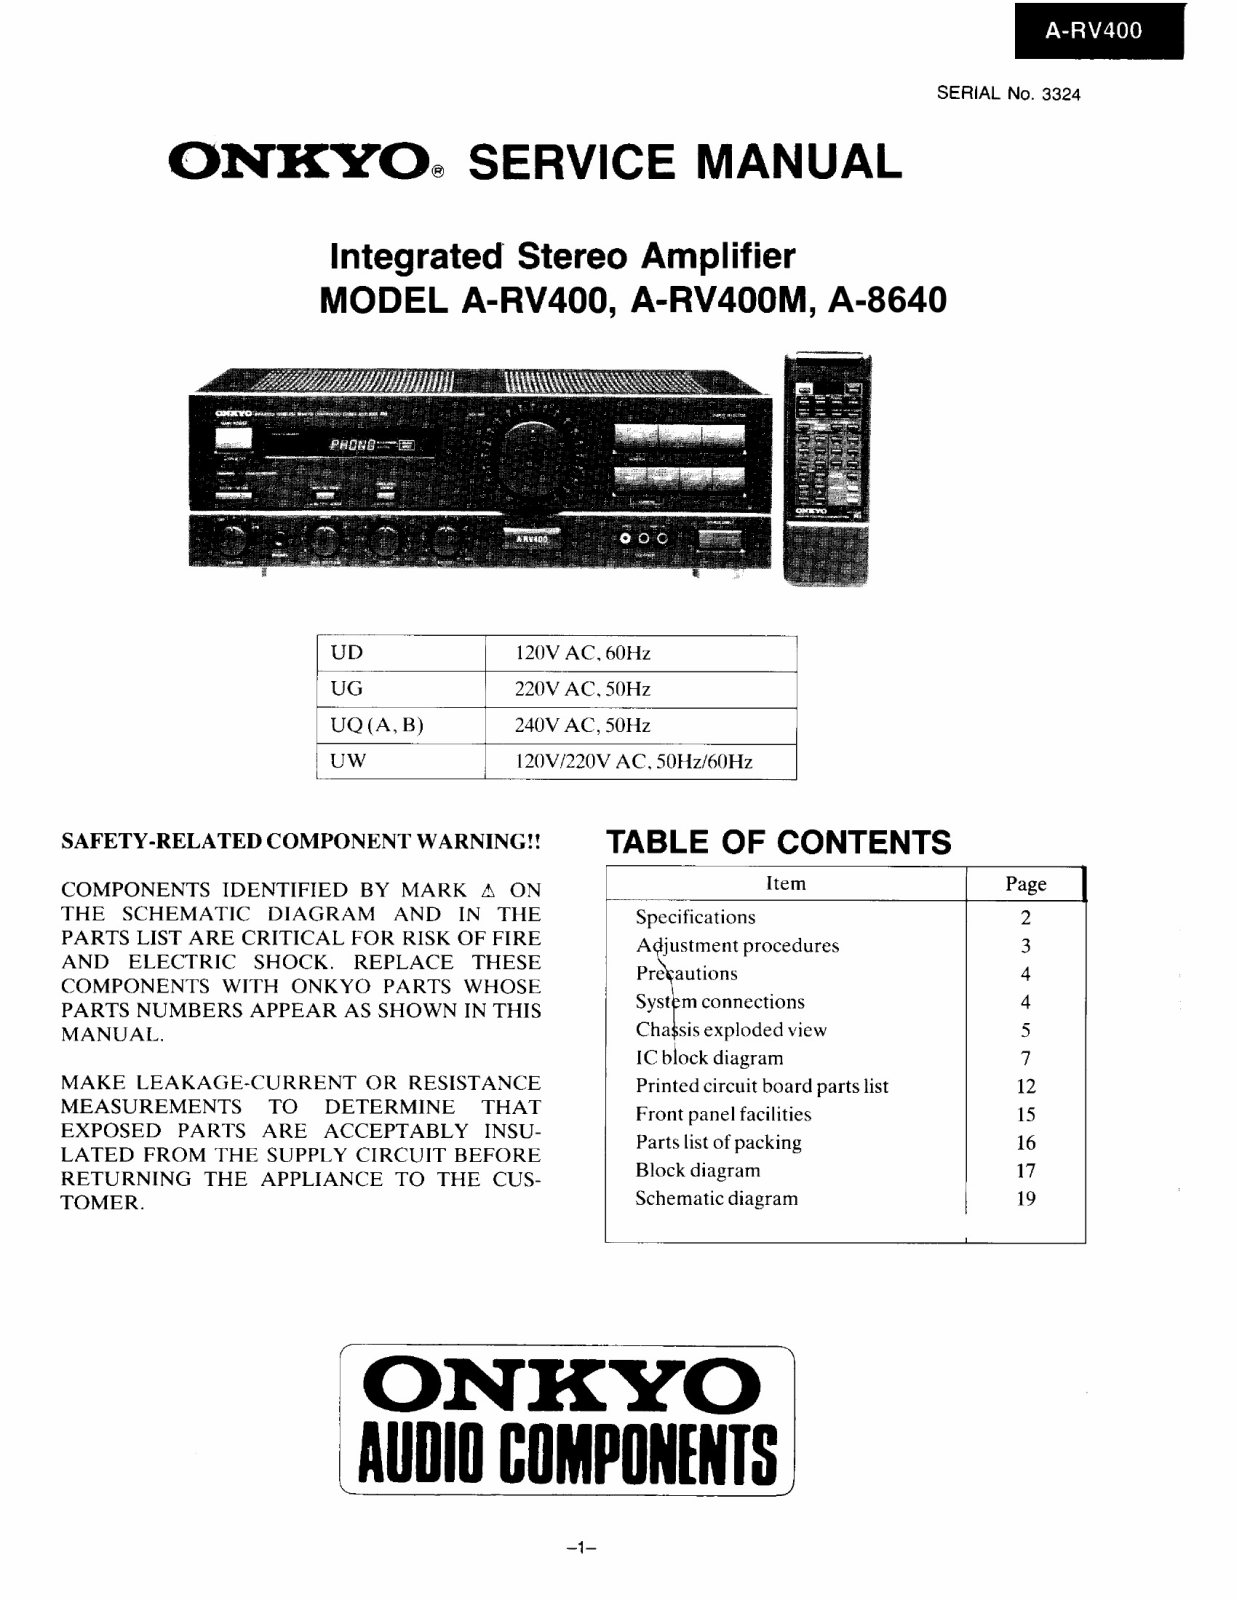 Onkyo A-8640 Service Manual